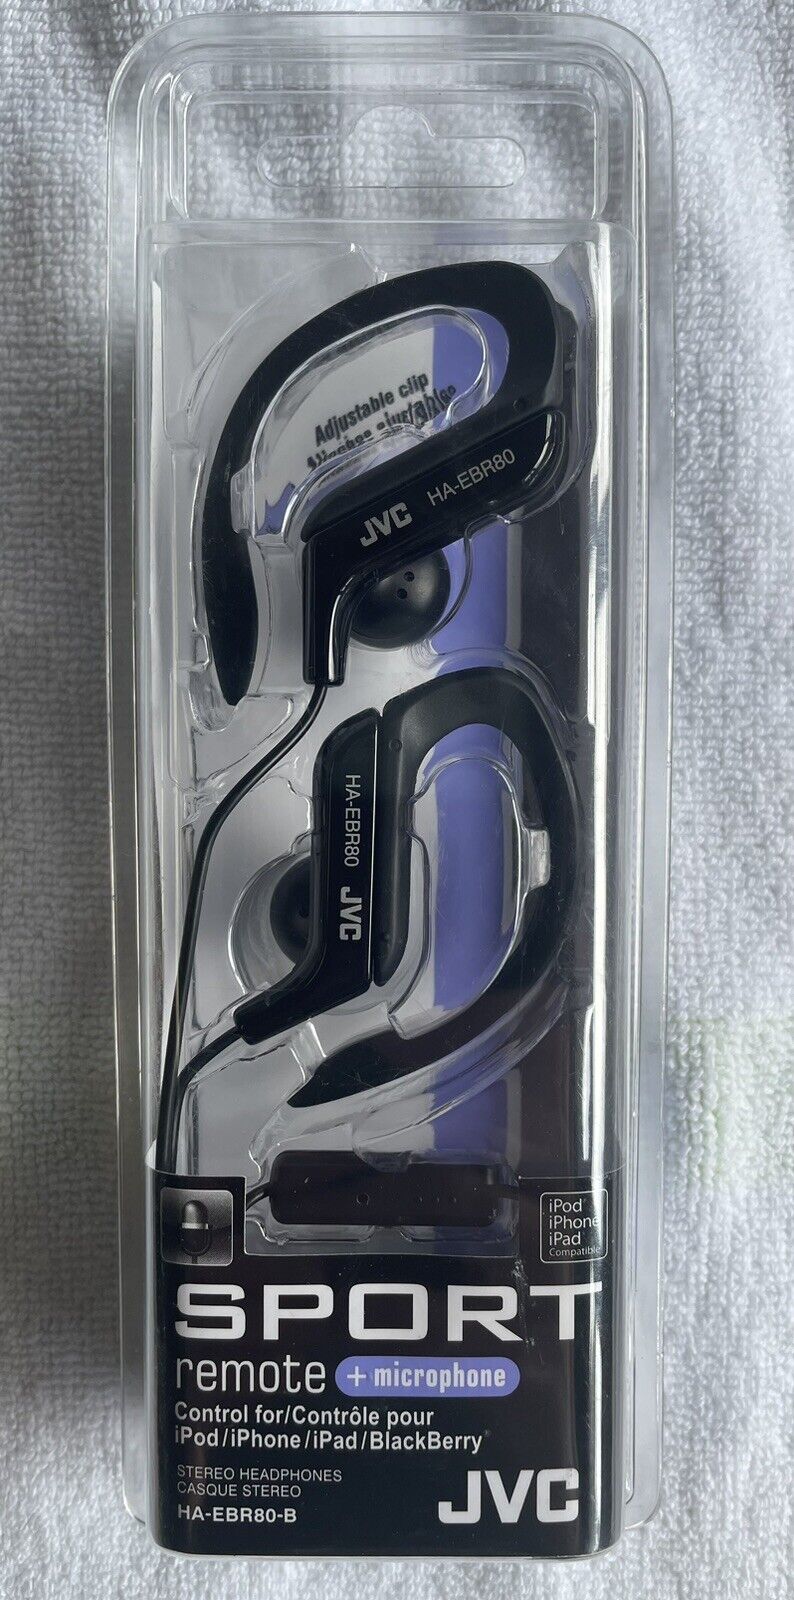 JVC Ha-Ebr80-A Sport Clip Earphones With Microphone (Black) Headphones New